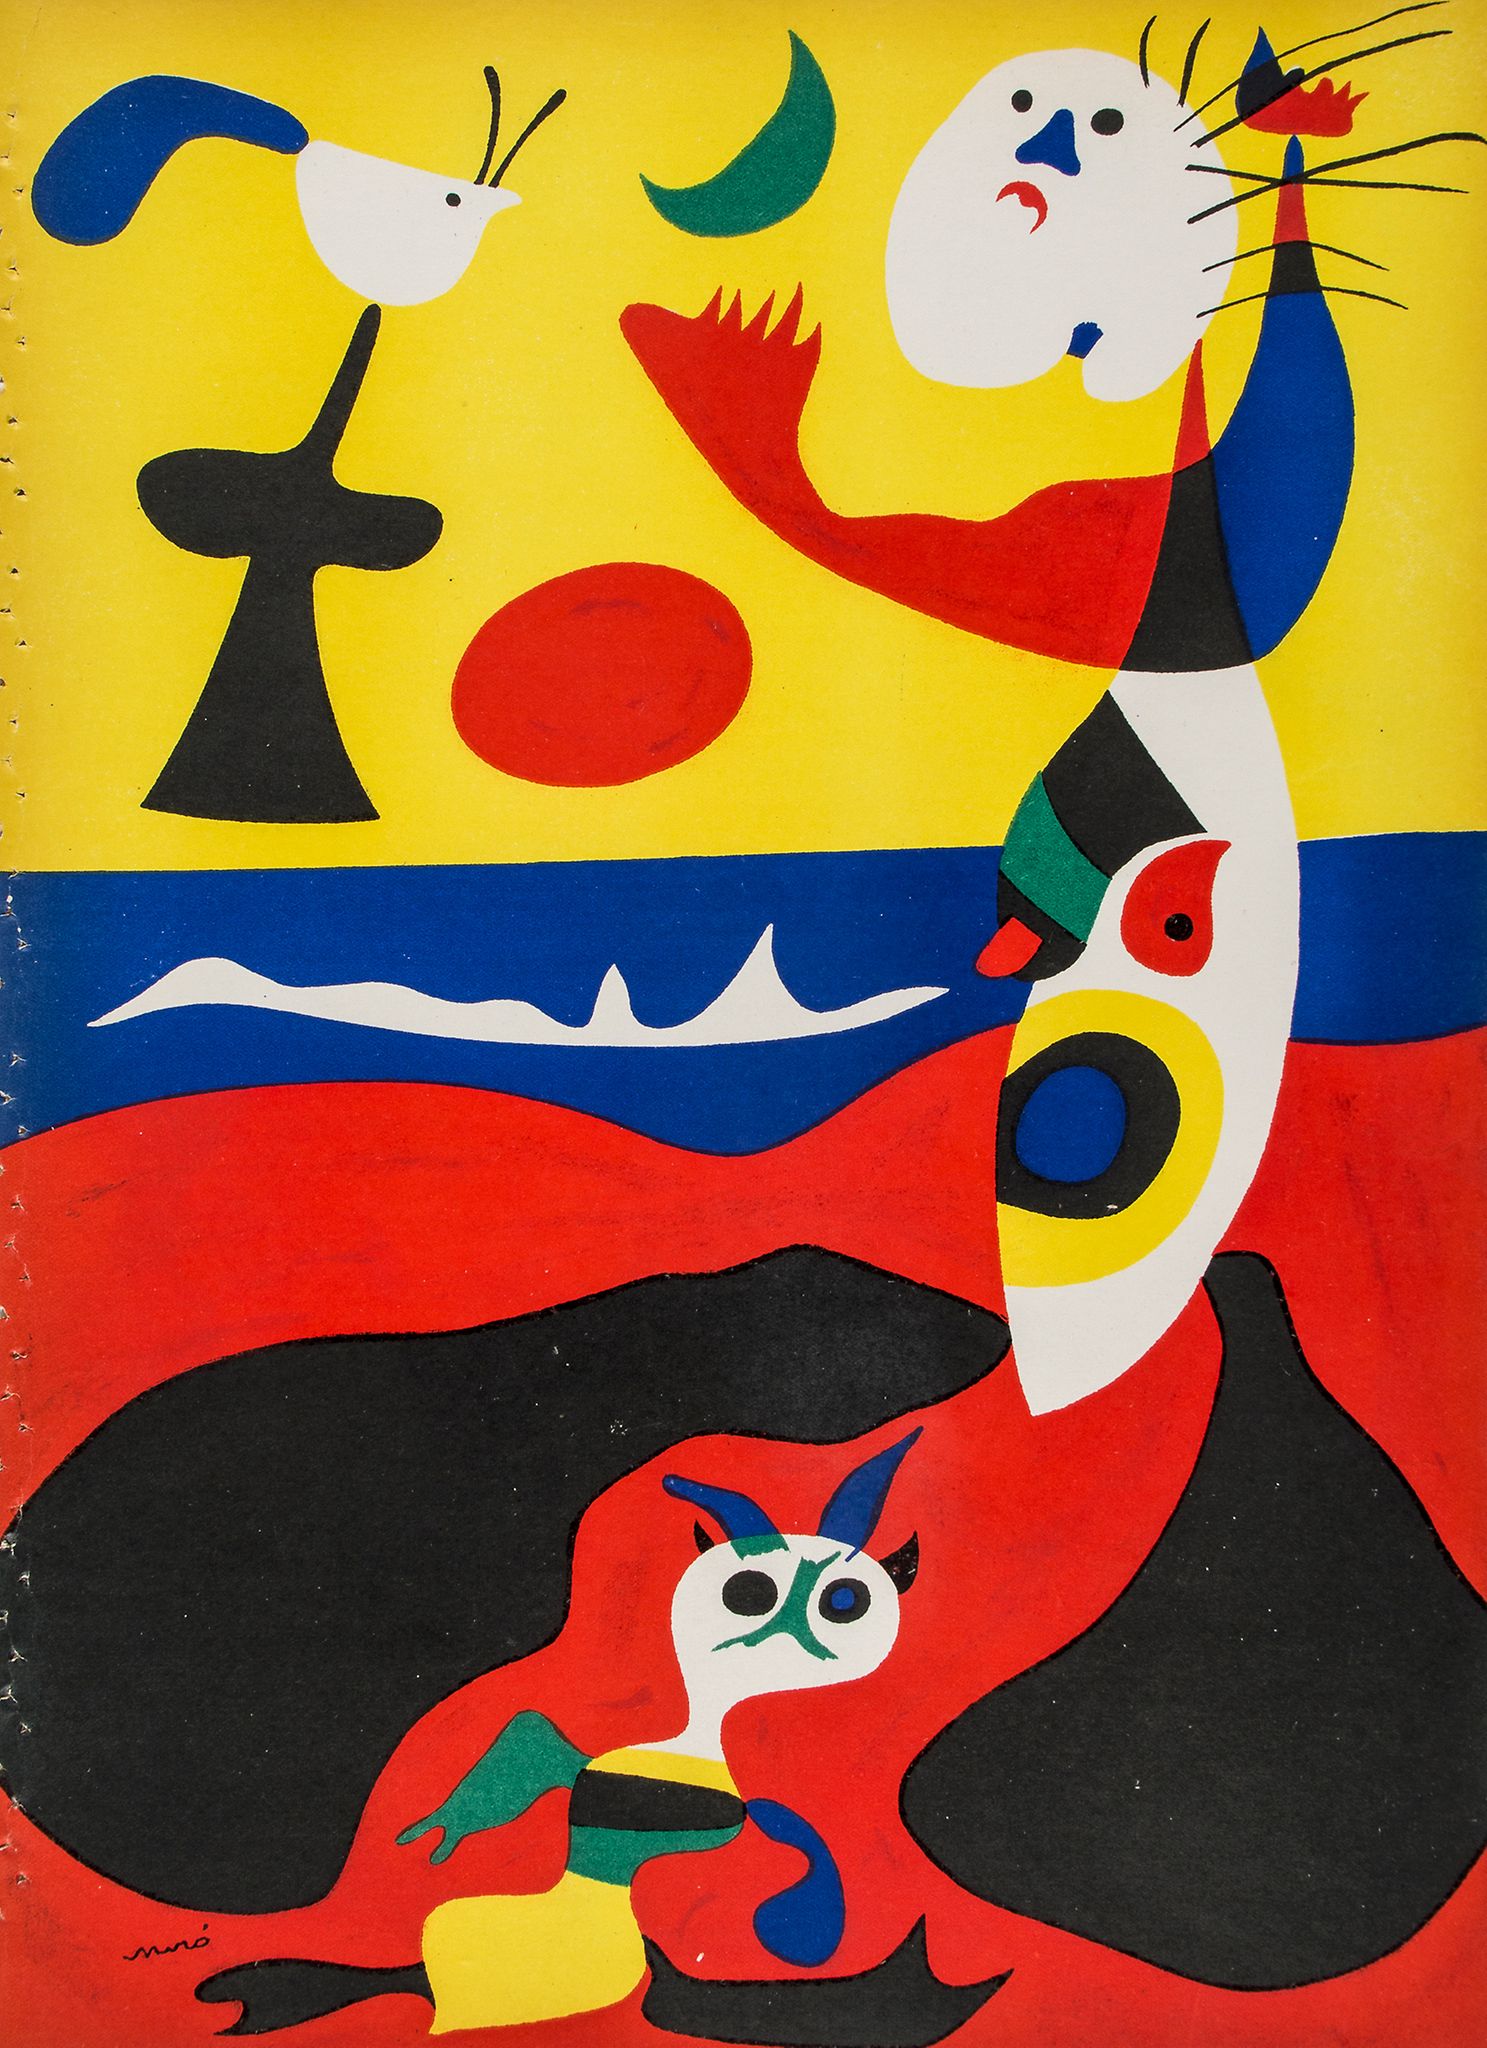 Joan Miró (1893-1983) - L'Été, from Verve Vol. 1, No. 3 pochoir in colours, 1938, with text on the